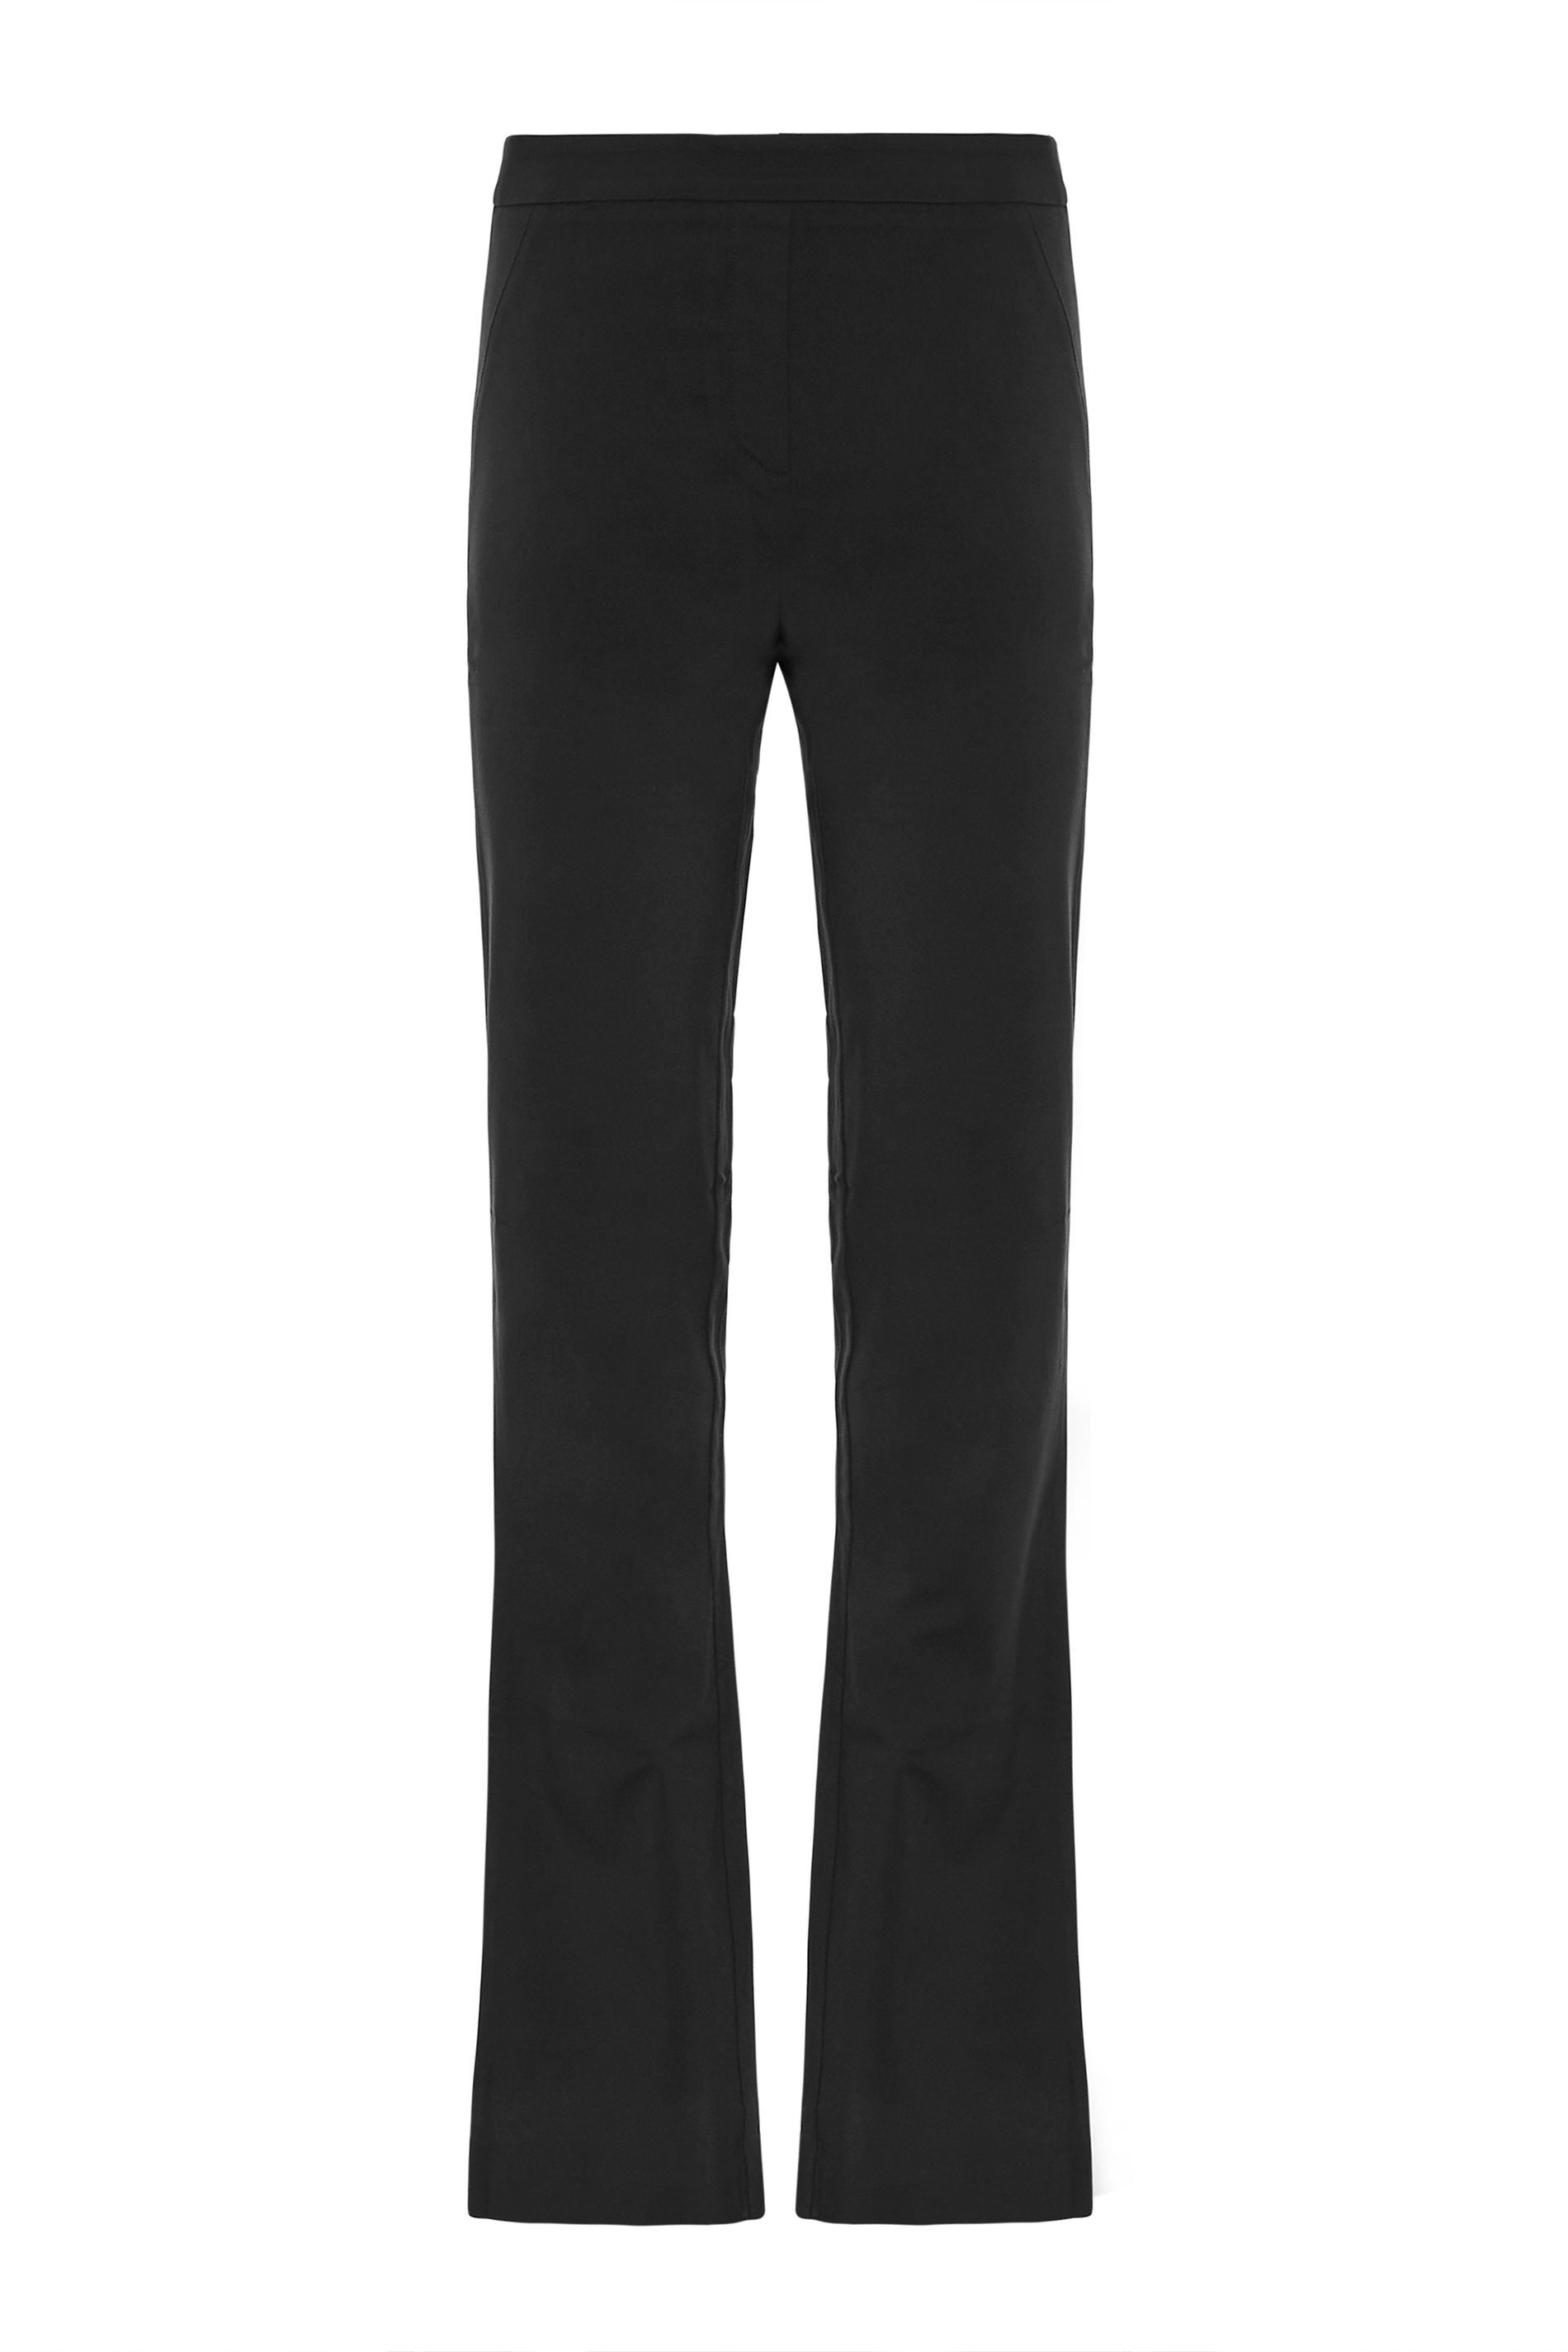 LTS Tall Women's Black Bootcut Trousers | Long Tall Sally 1